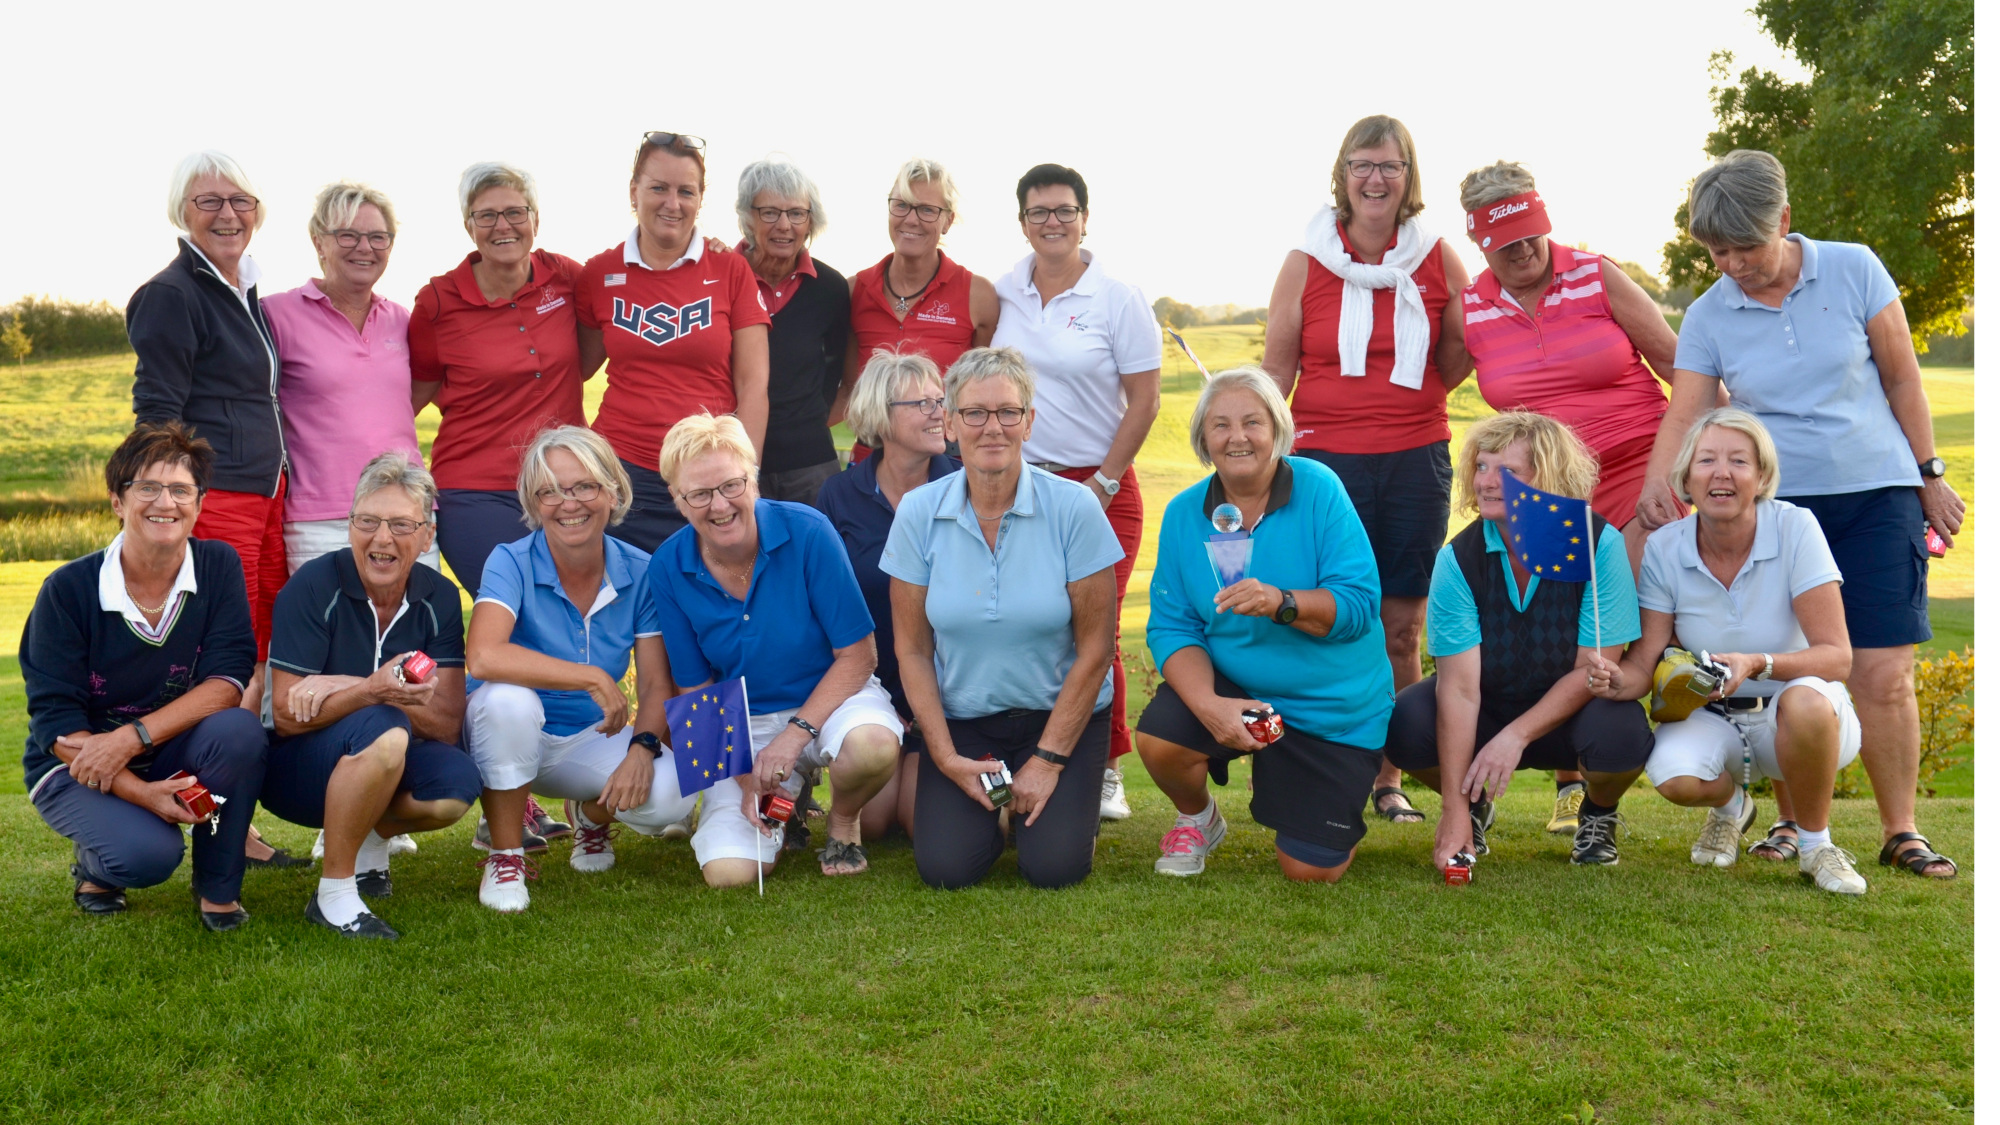 Tirsdagspigerne - Tønder - Aabenraa Golfklub